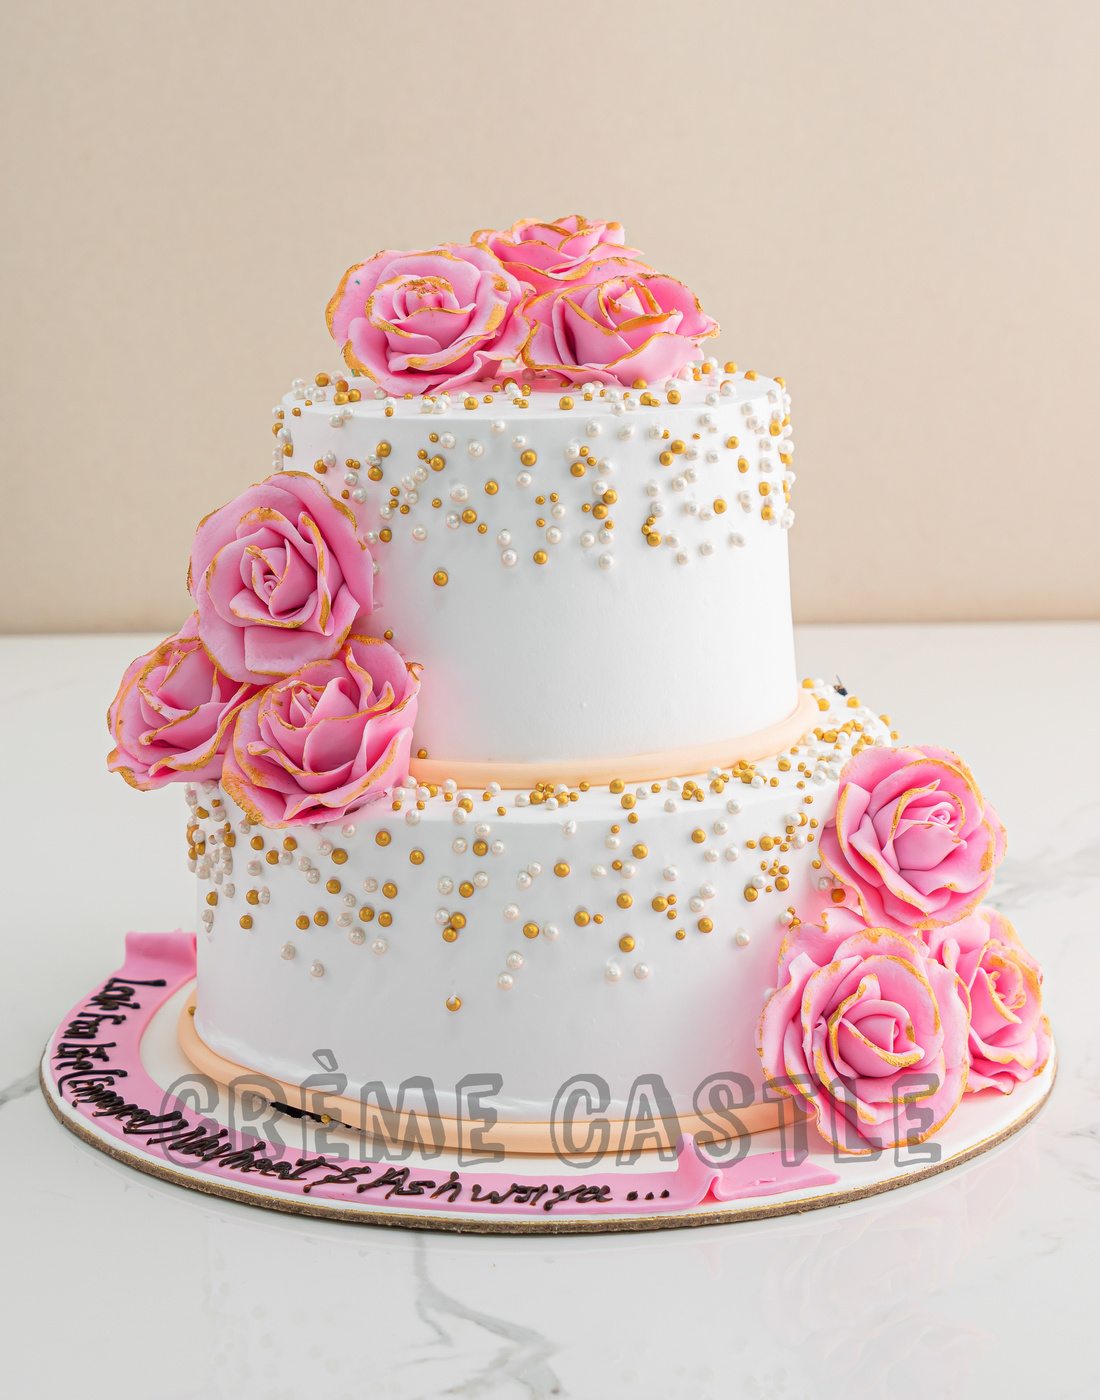 Golden Moments: Inspiring Cake Designs for 50th Wedding Anniversary | by  Allthingssweet | Medium